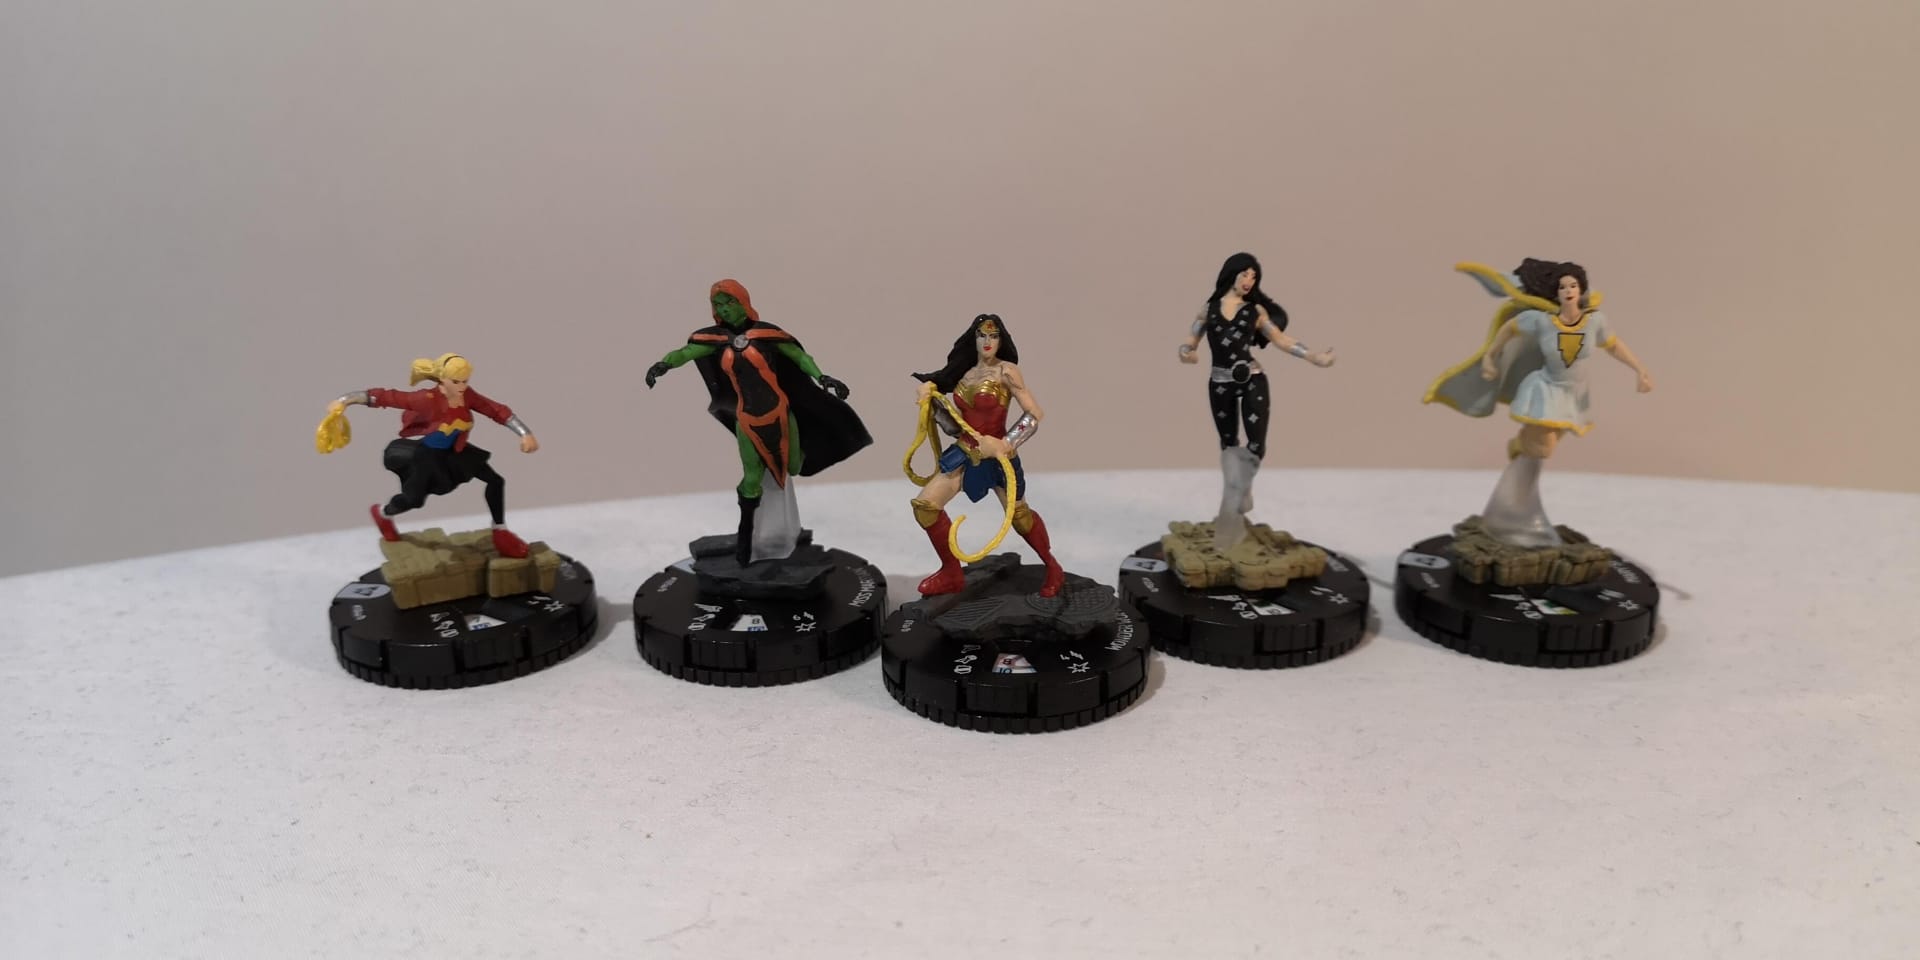 DC Comics HeroClix: Wonder Woman 80th Anniversary Miniatures Game